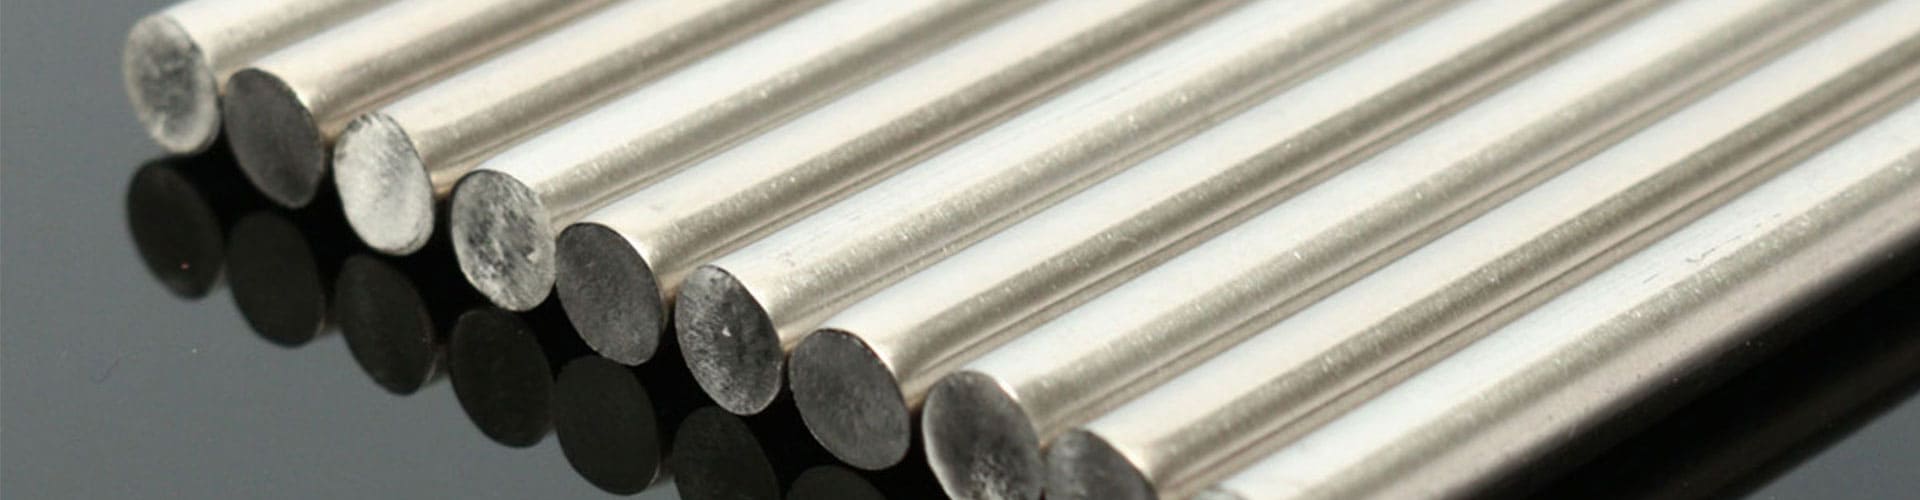 nickel-alloy-201-round-bars-rods-manufacturer-exporter-supplier-in-argentina